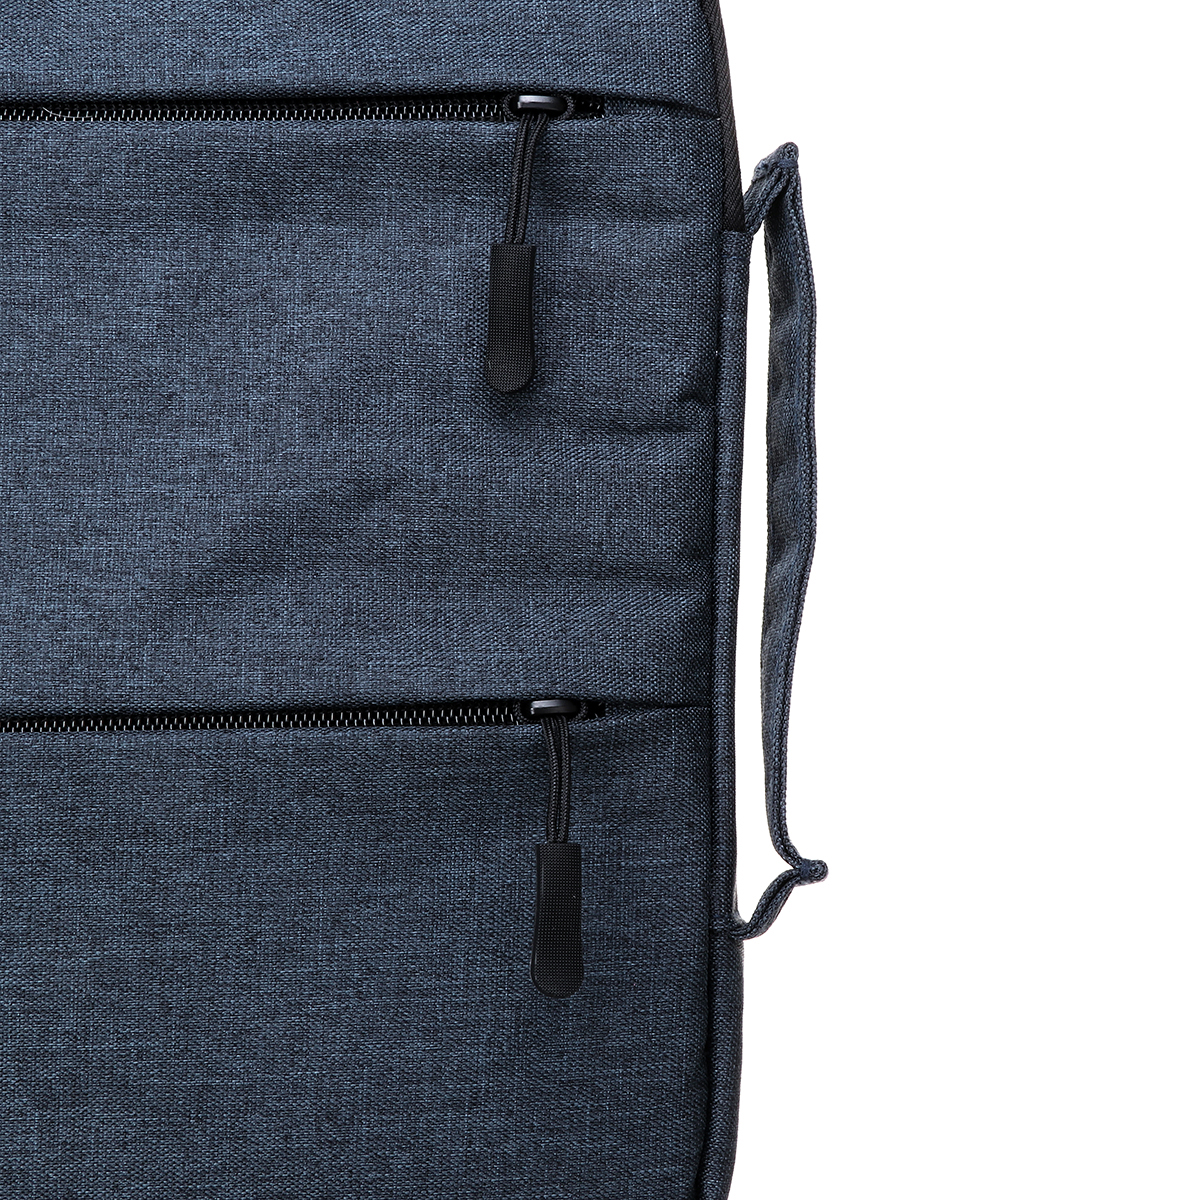 New 13.3/15.6 inch Waterproof Laptop Sleeve Bag Case Laptop Inner Case ...